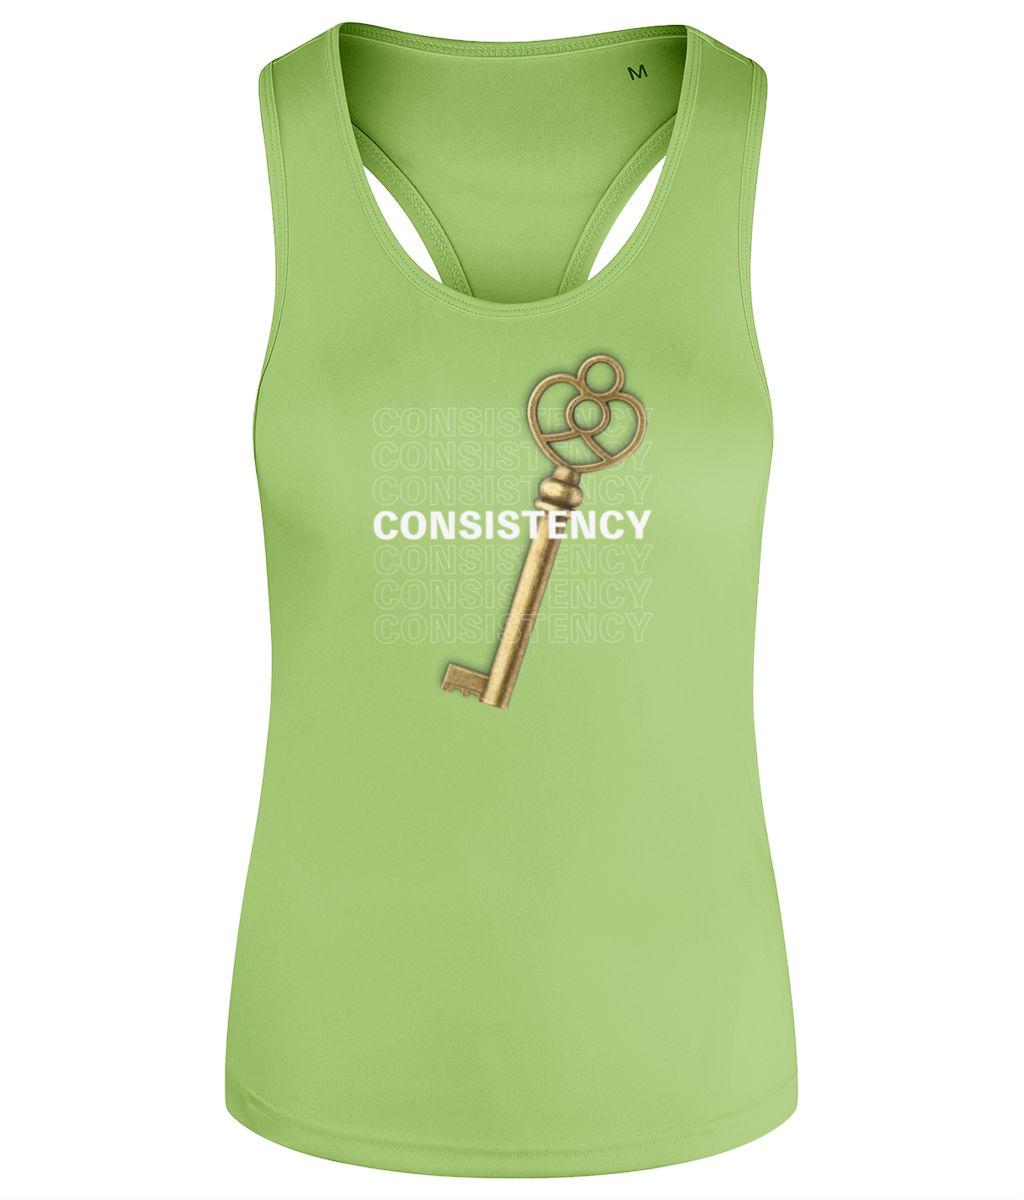 Consistency is Key Women's Recycled Racerback Vest Gym Tank Top